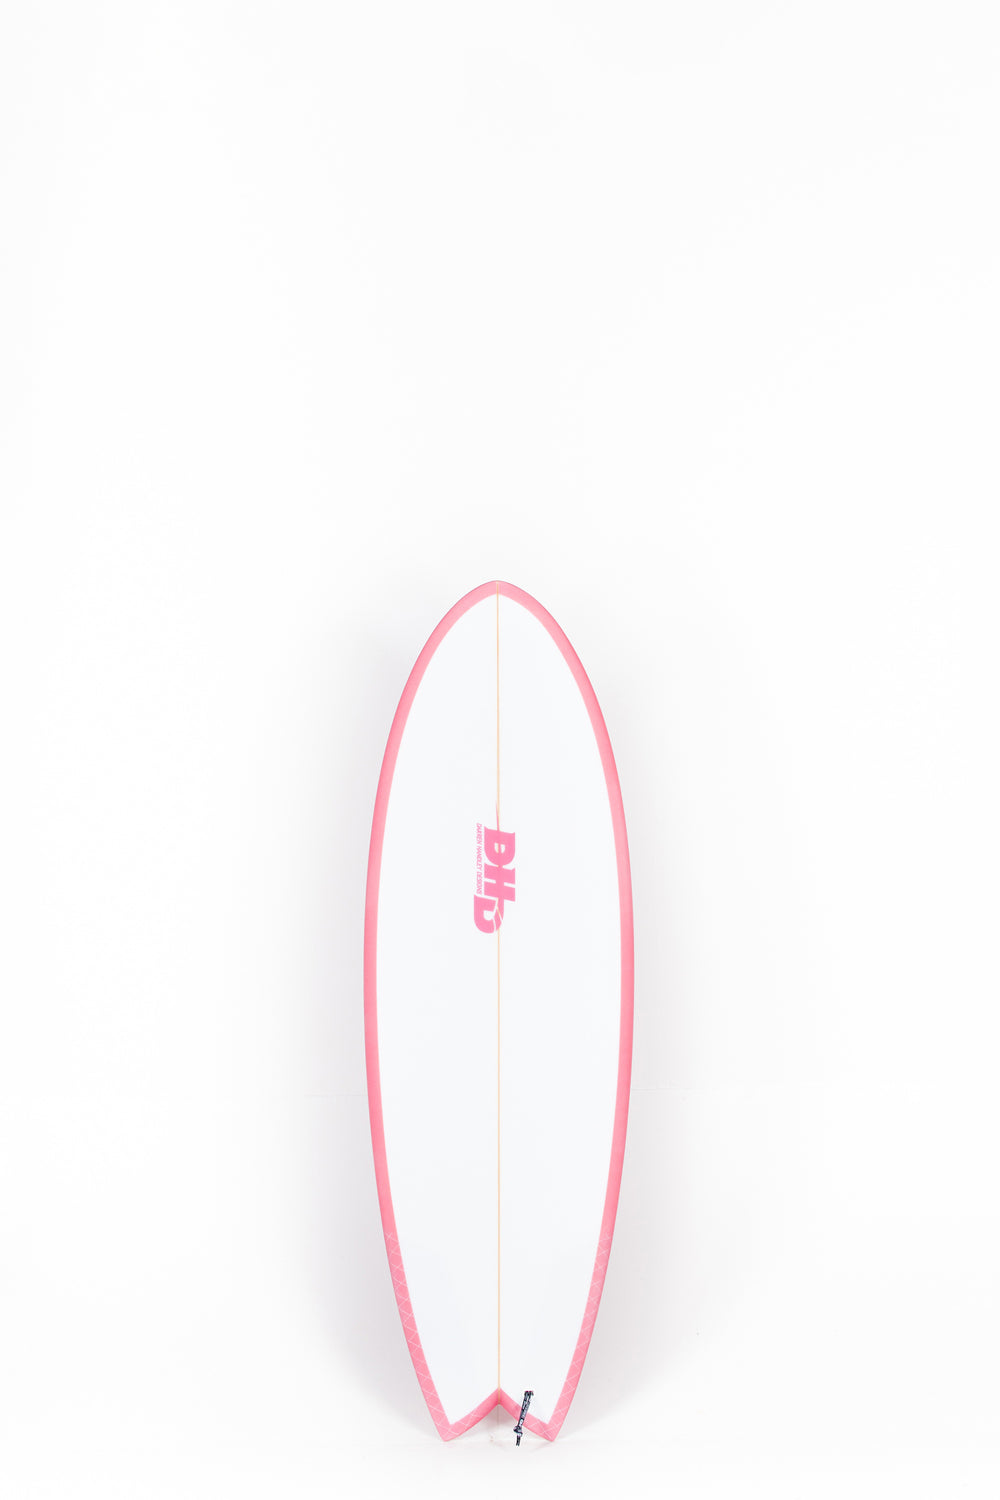 Pukas Surf Shop - Copia de DHD - MINI TWIN II by Darren Handley - 5'5